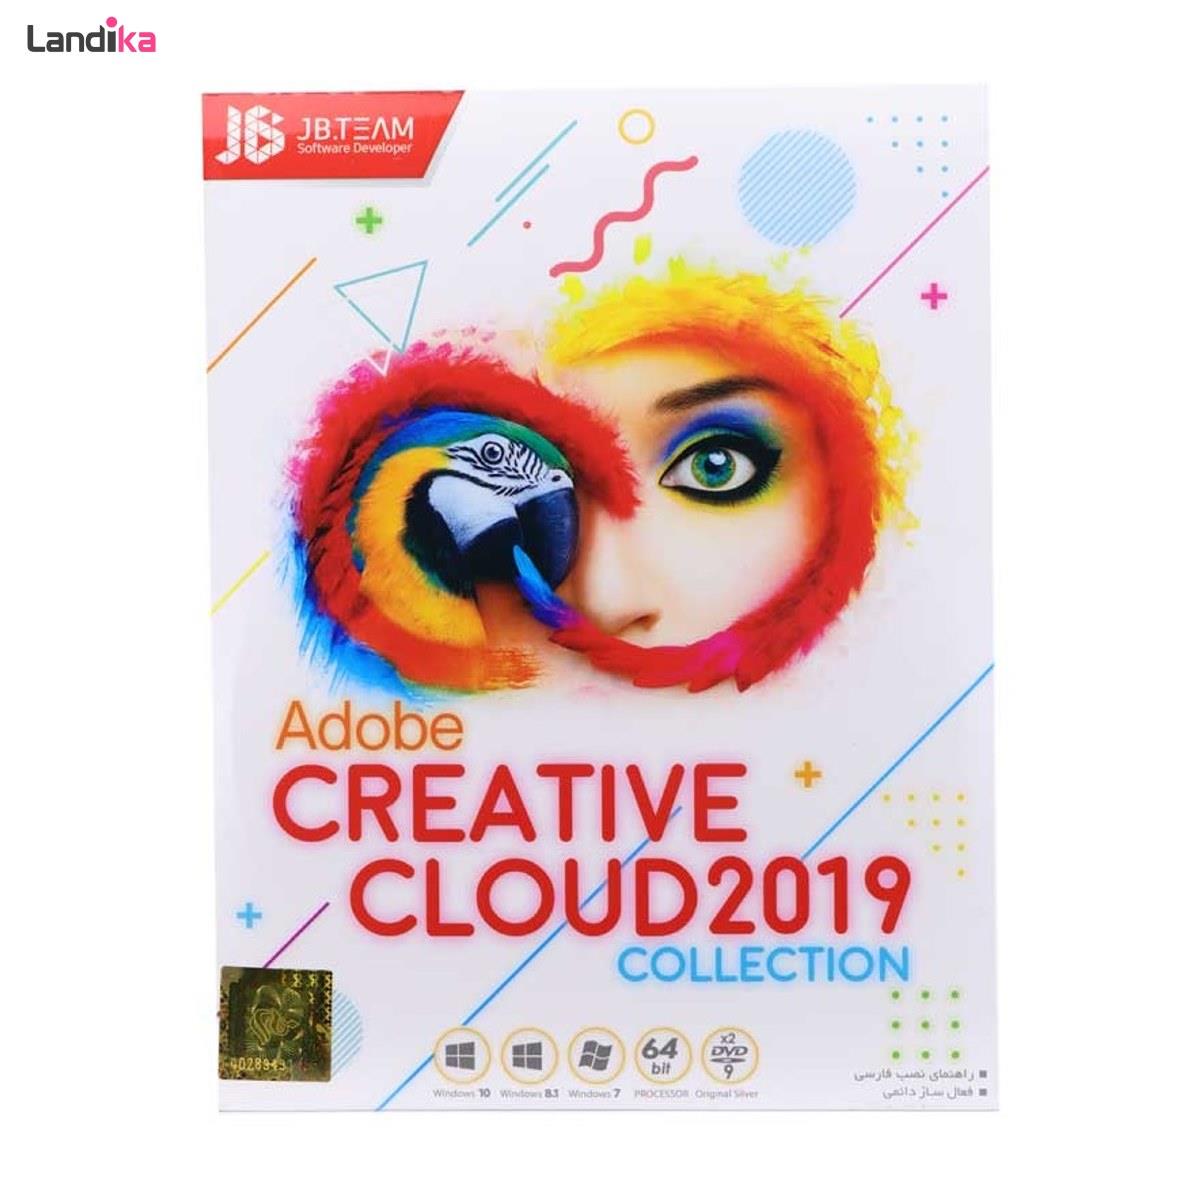 Adobe creative cloud 2019 mac torrent android sdk platform tools zip file for macos